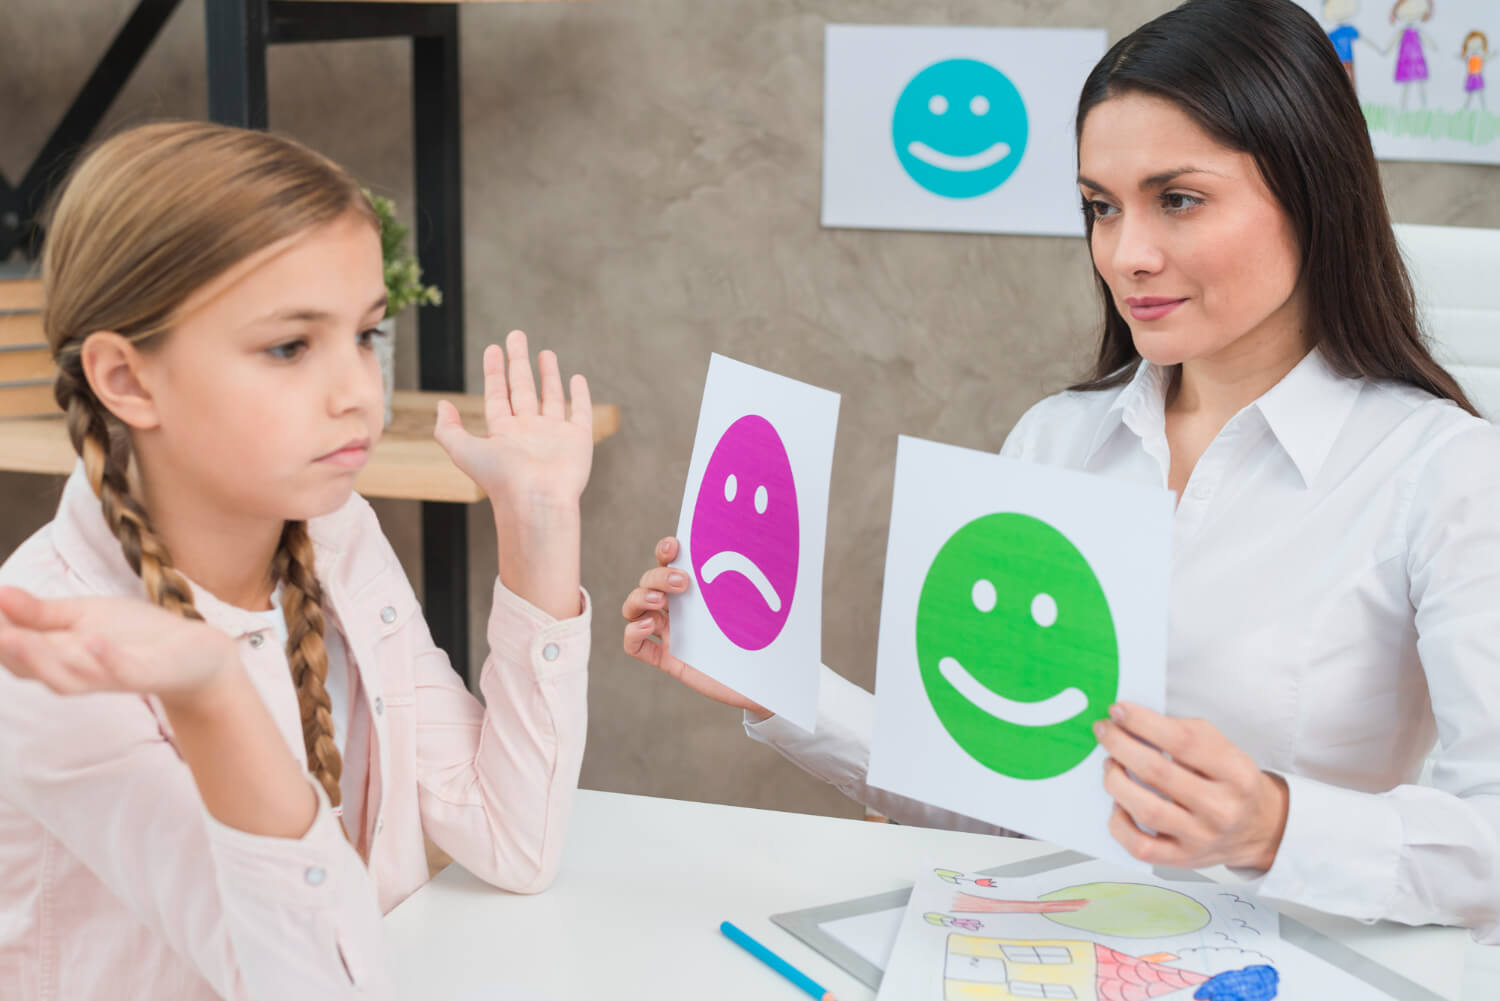 smiling-psychologist-showing-happy-sad-emotion-faces-cards-girl-child (1)